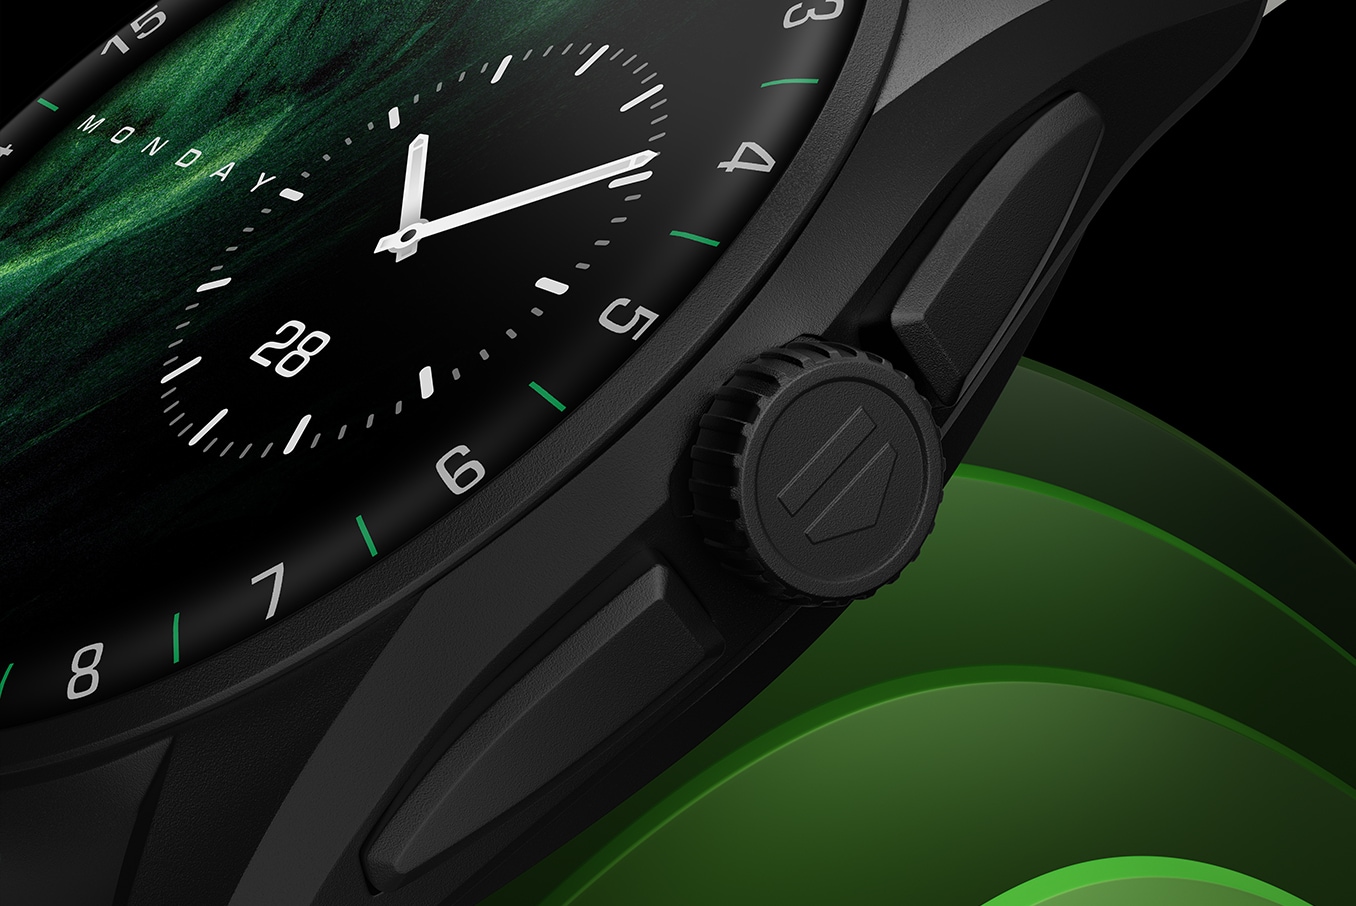 TAG Heuer Golf Watch, Luxury Golf Smartwatches, TAG Heuer US